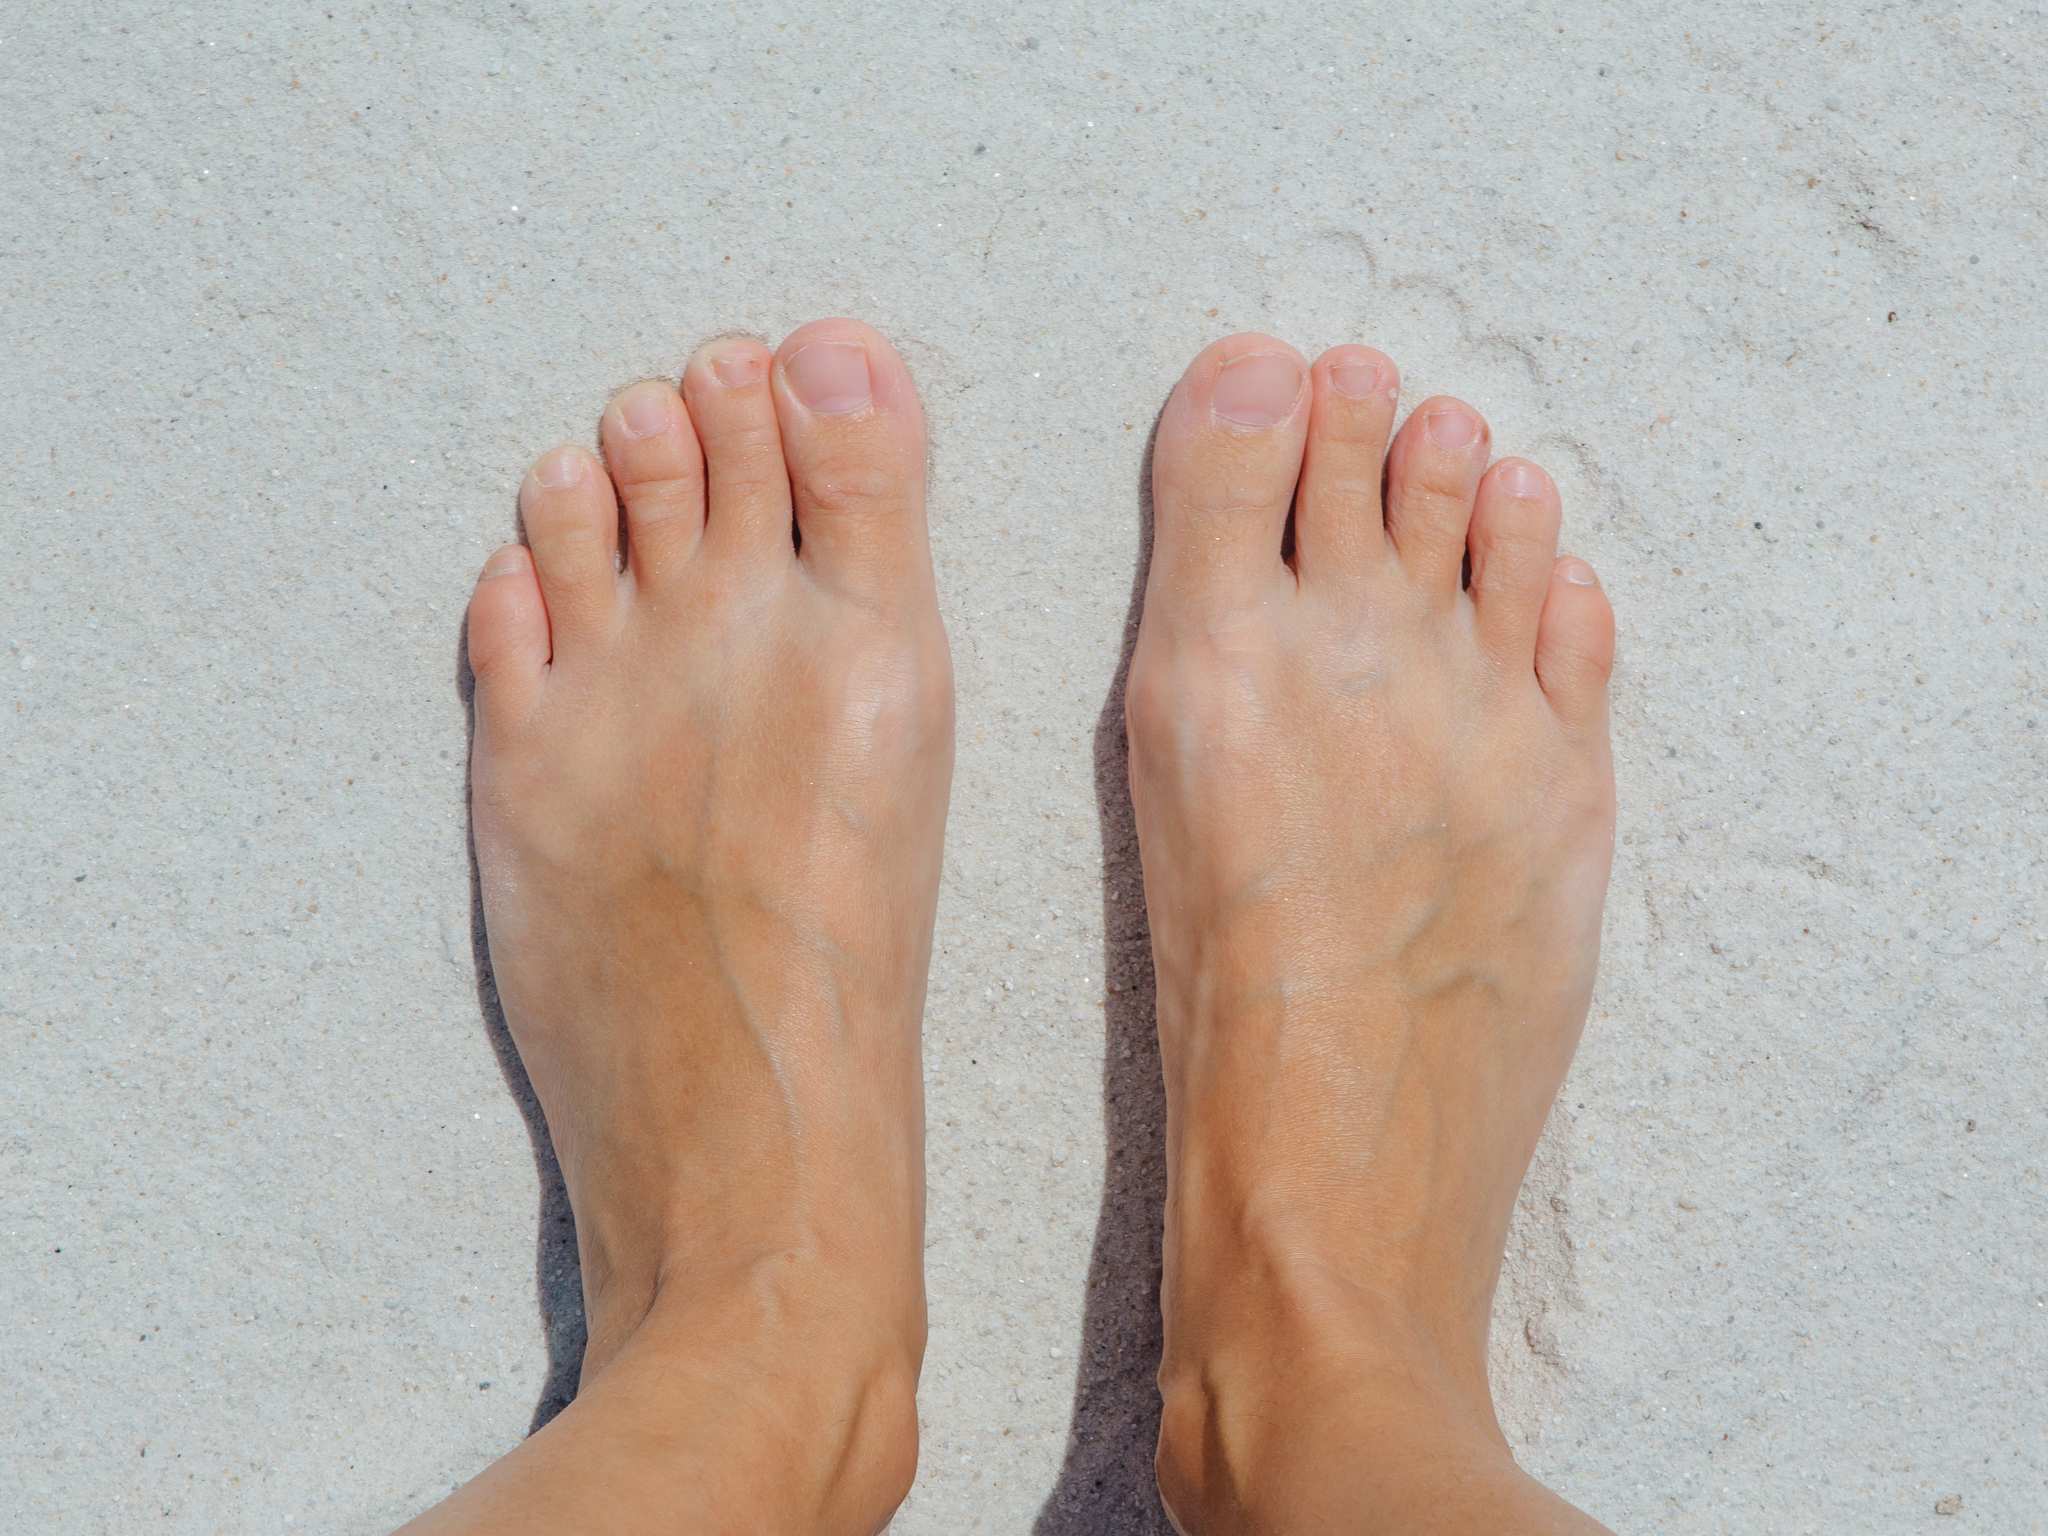 Feet on the white sand.